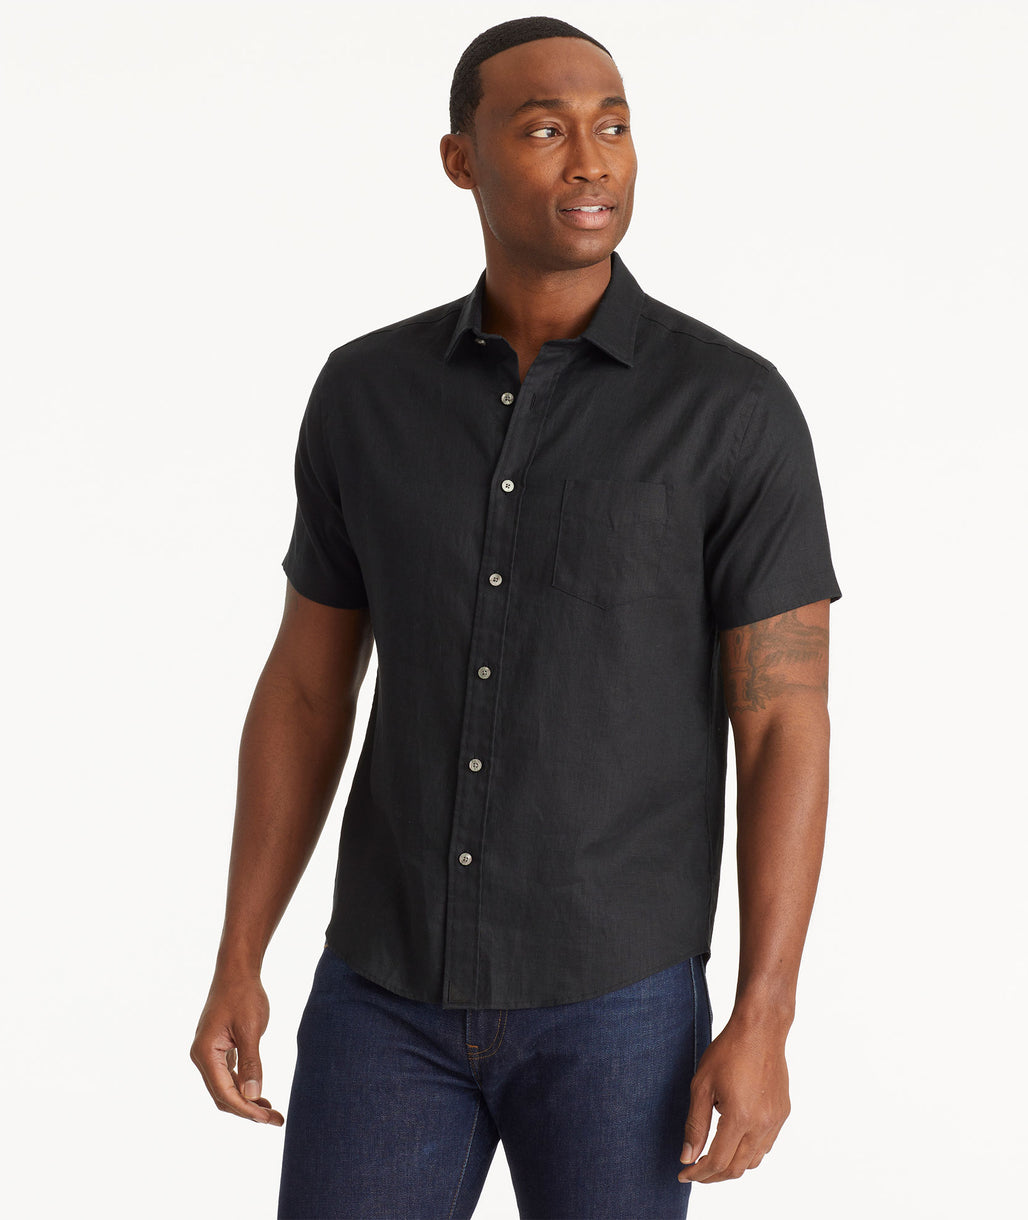 Model wearing an UNTUCKit Black Wrinkle-Resistant Linen Short Sleeve Cameron Shirt